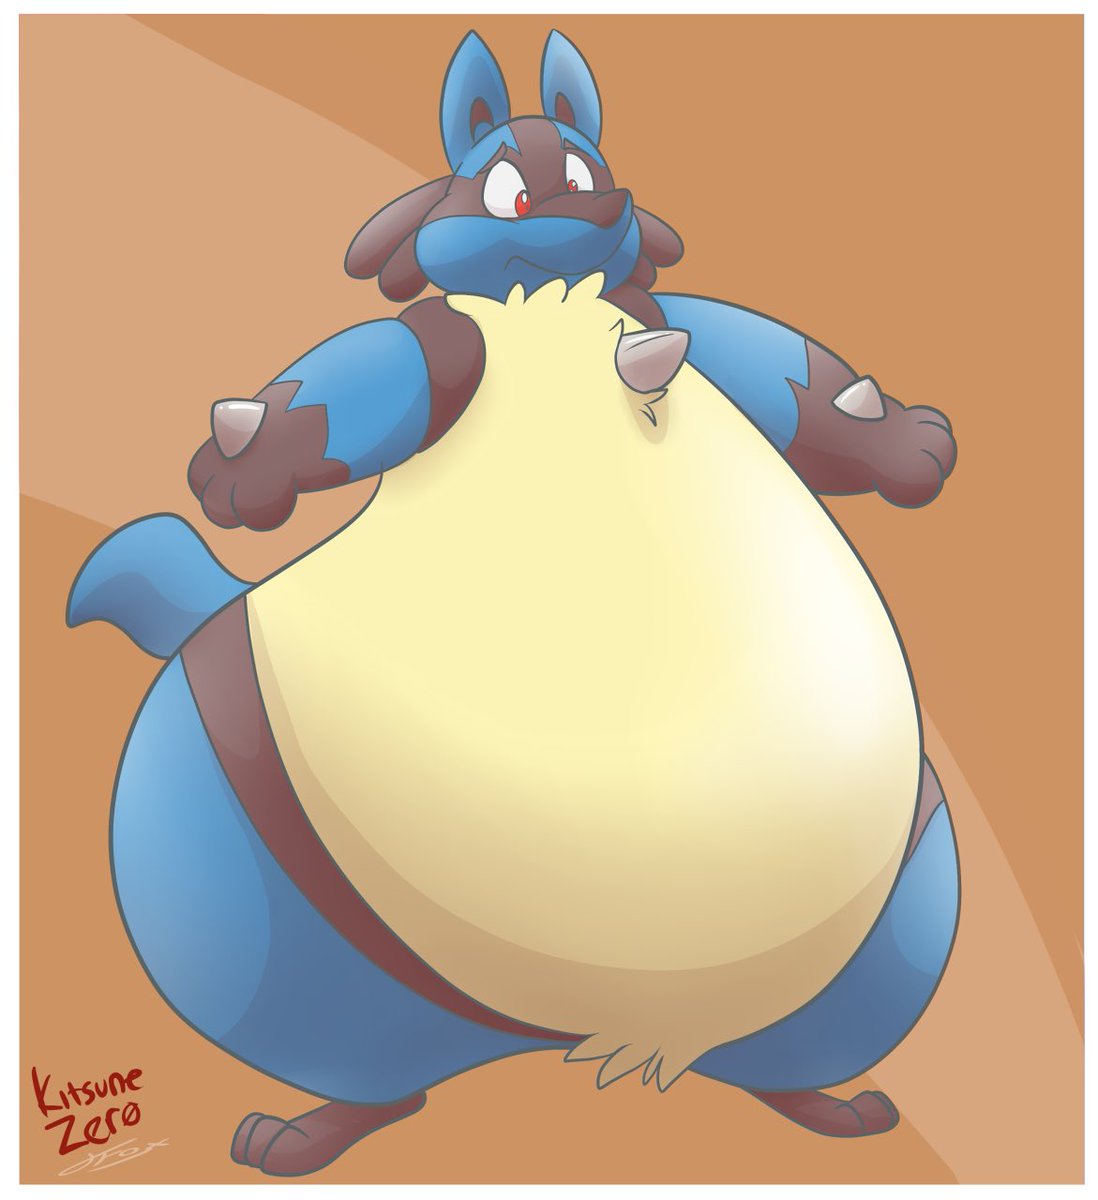 Pokémon to inflate. // #art #fat #belly #inflation #fatfurry #furryart #fur...